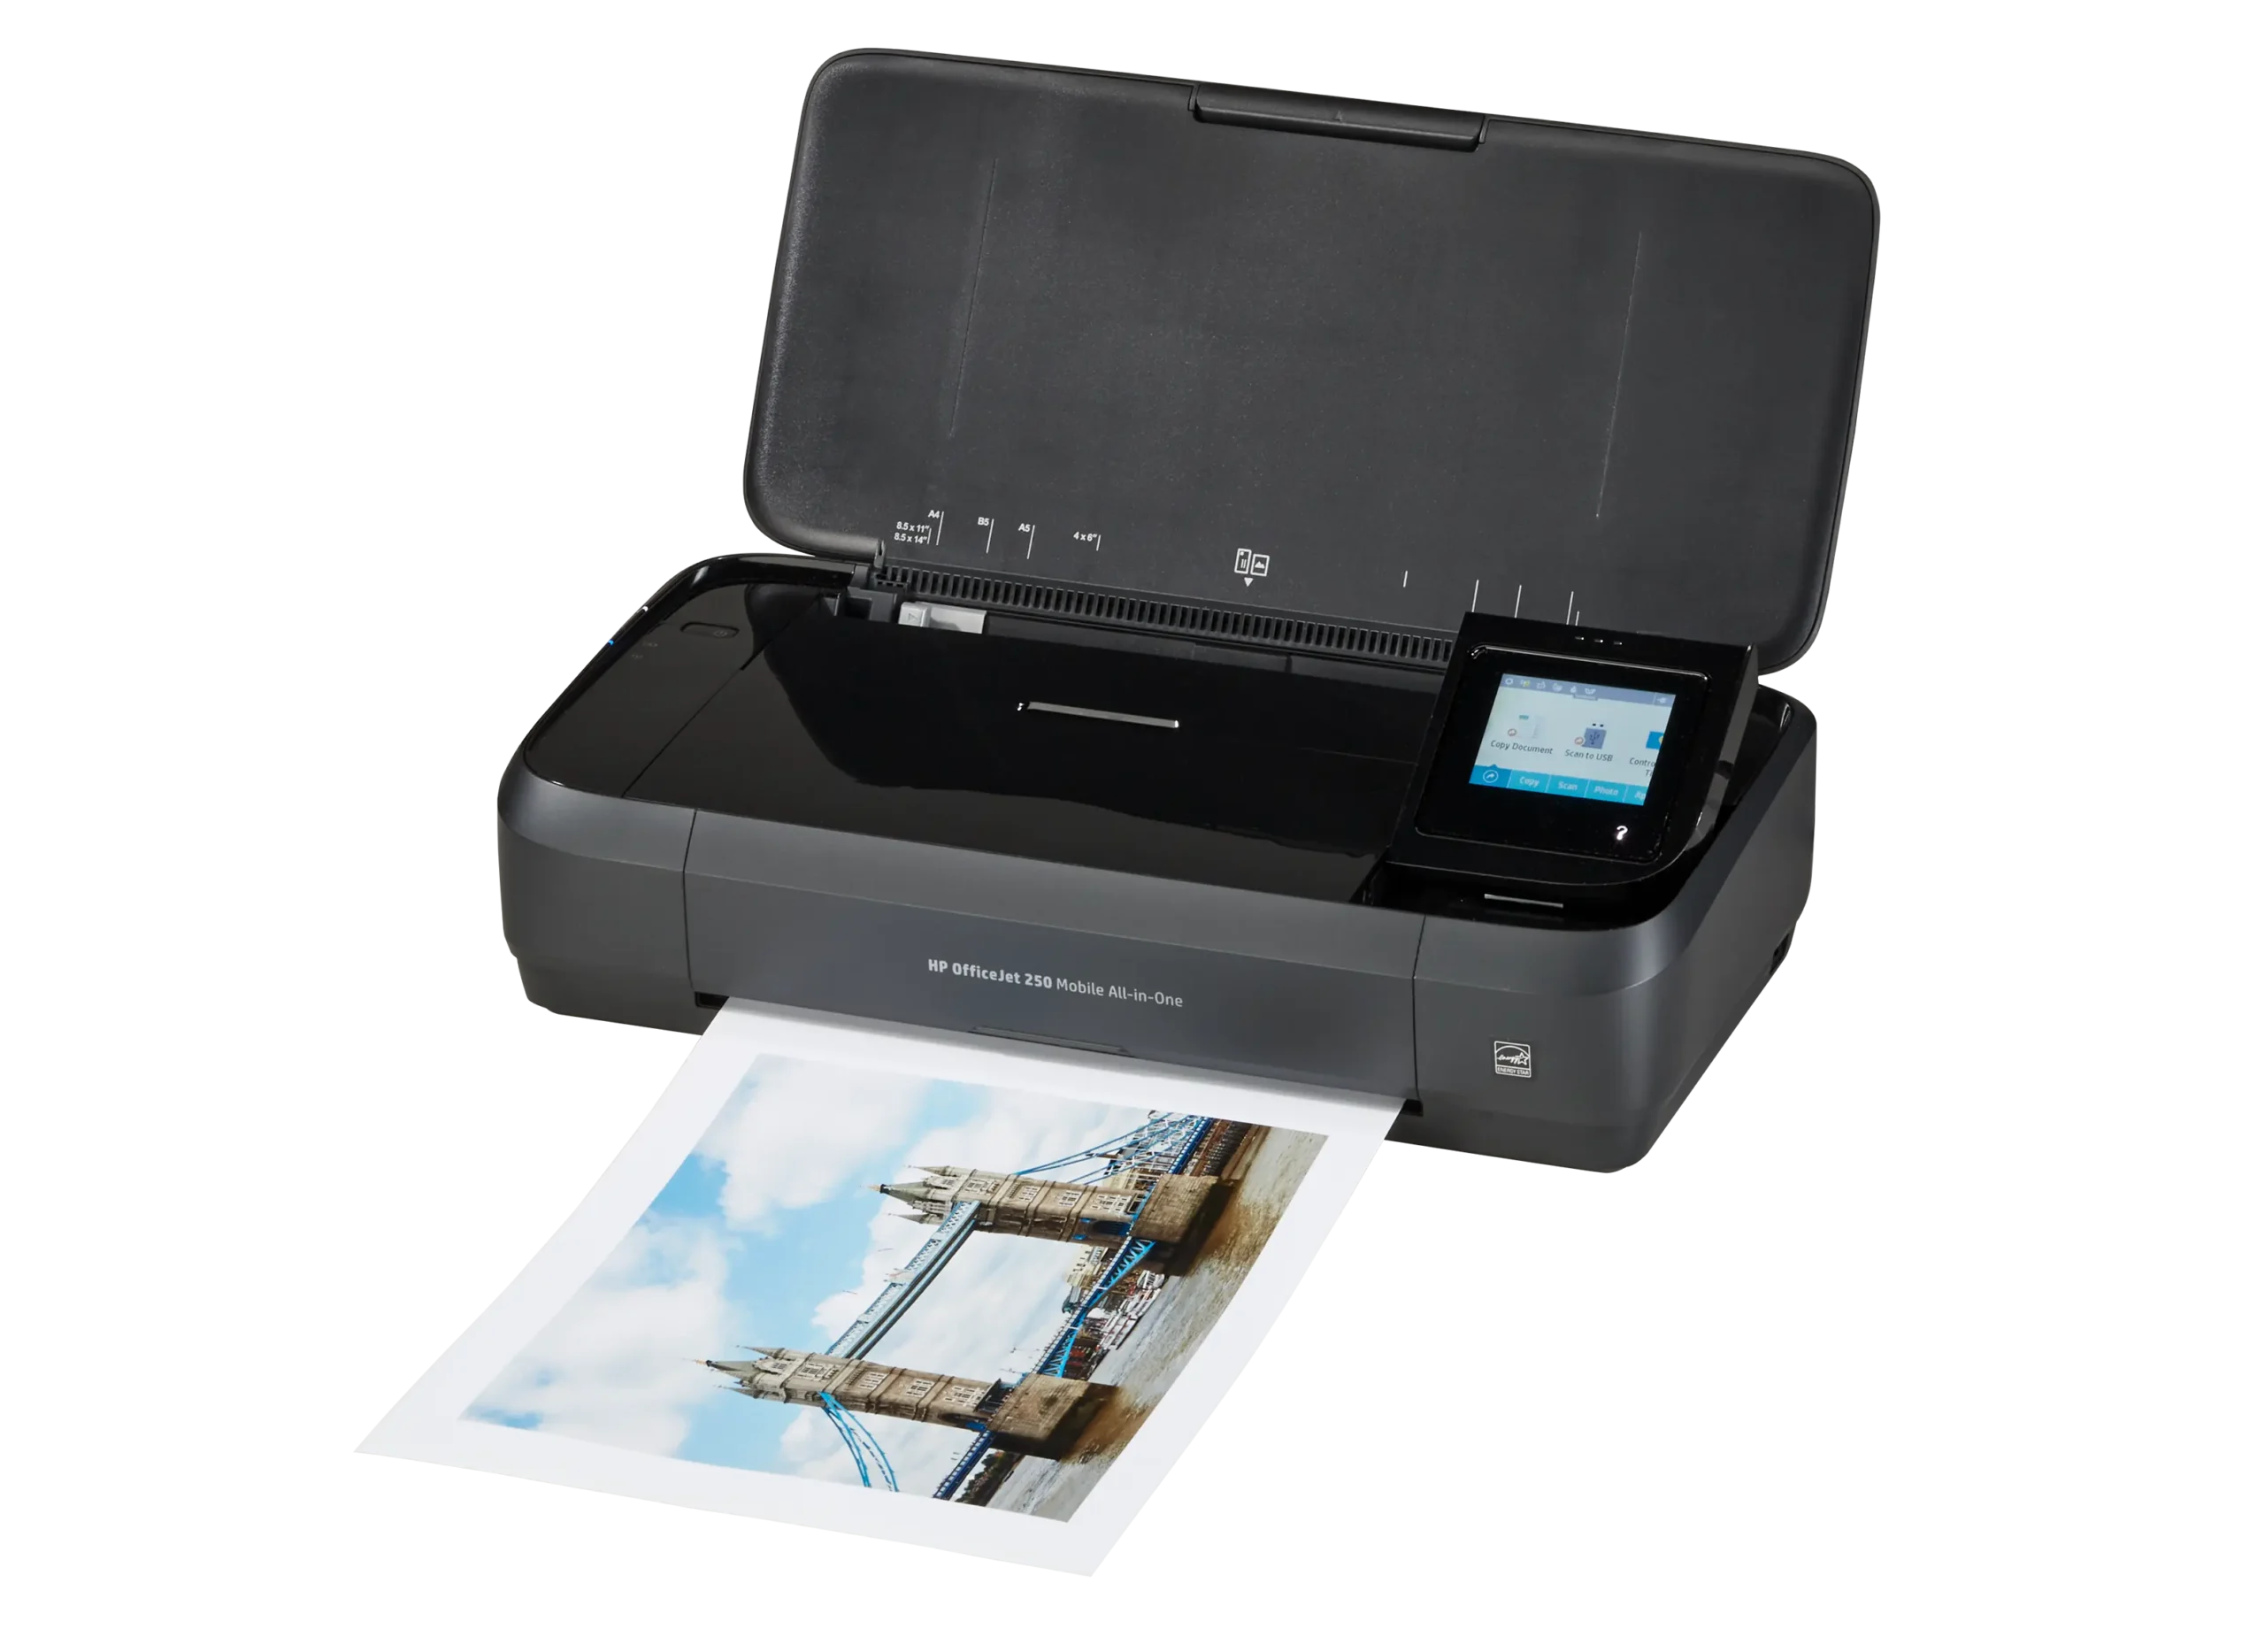 hewlett packard 250 printer - How do I copy on my HP 250 printer